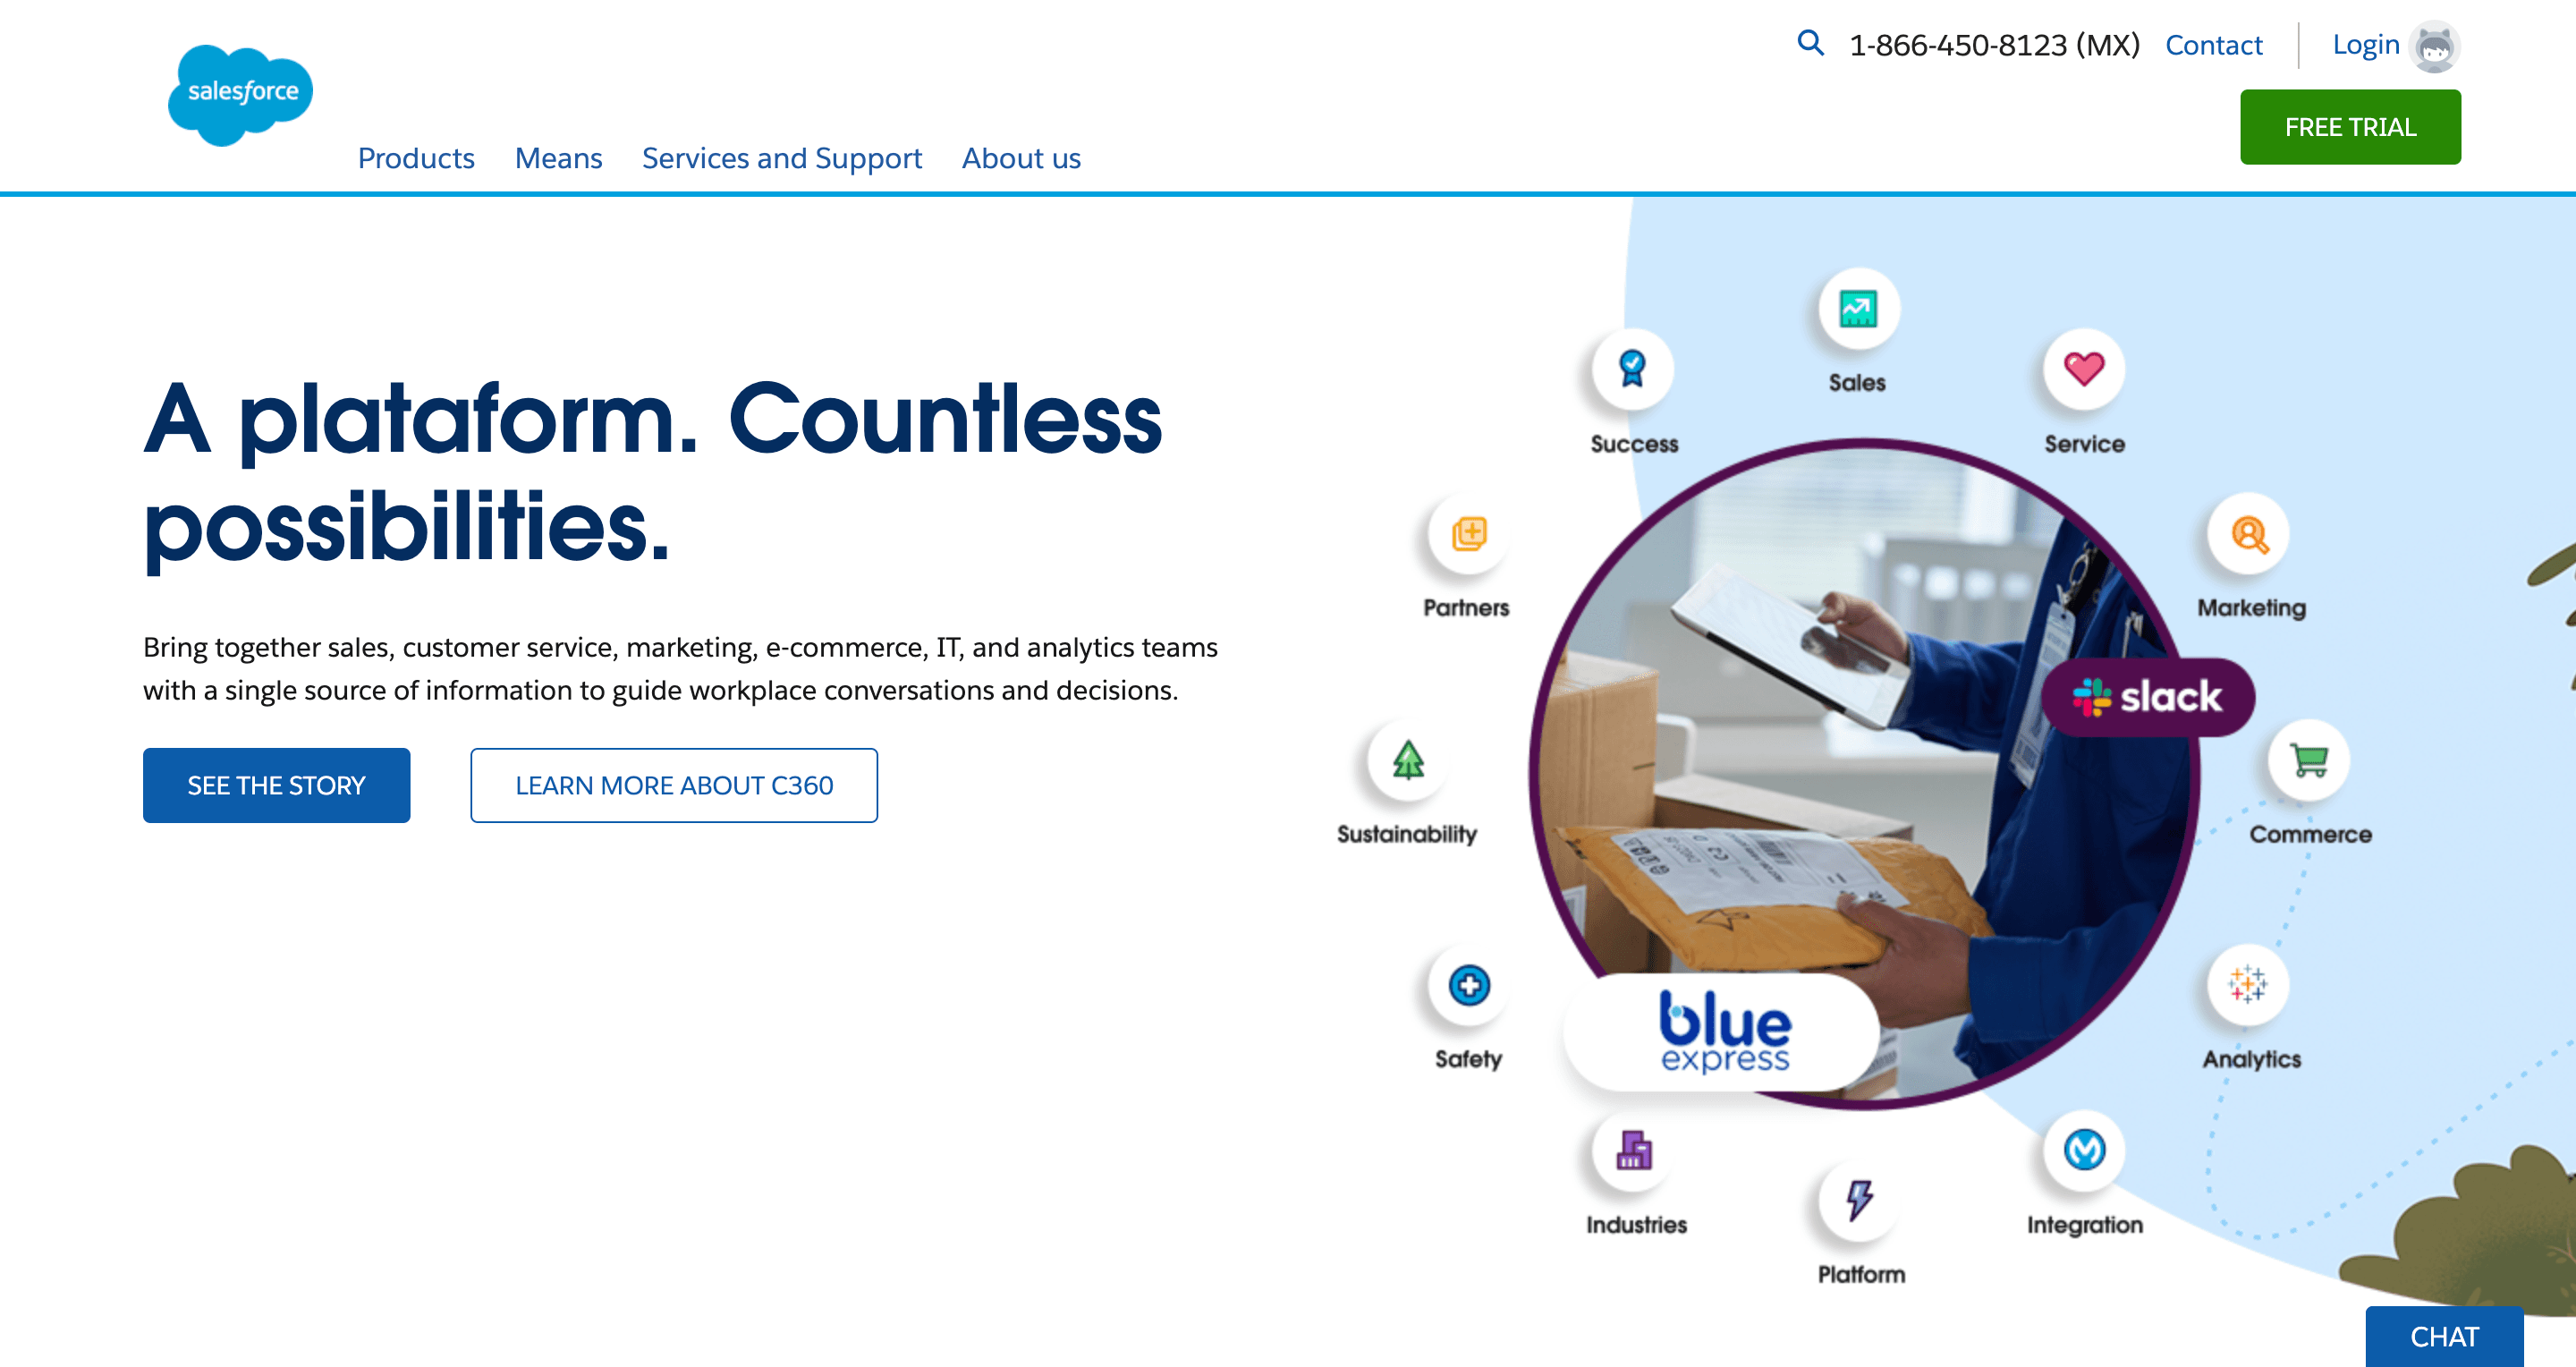 Salesforce homepage